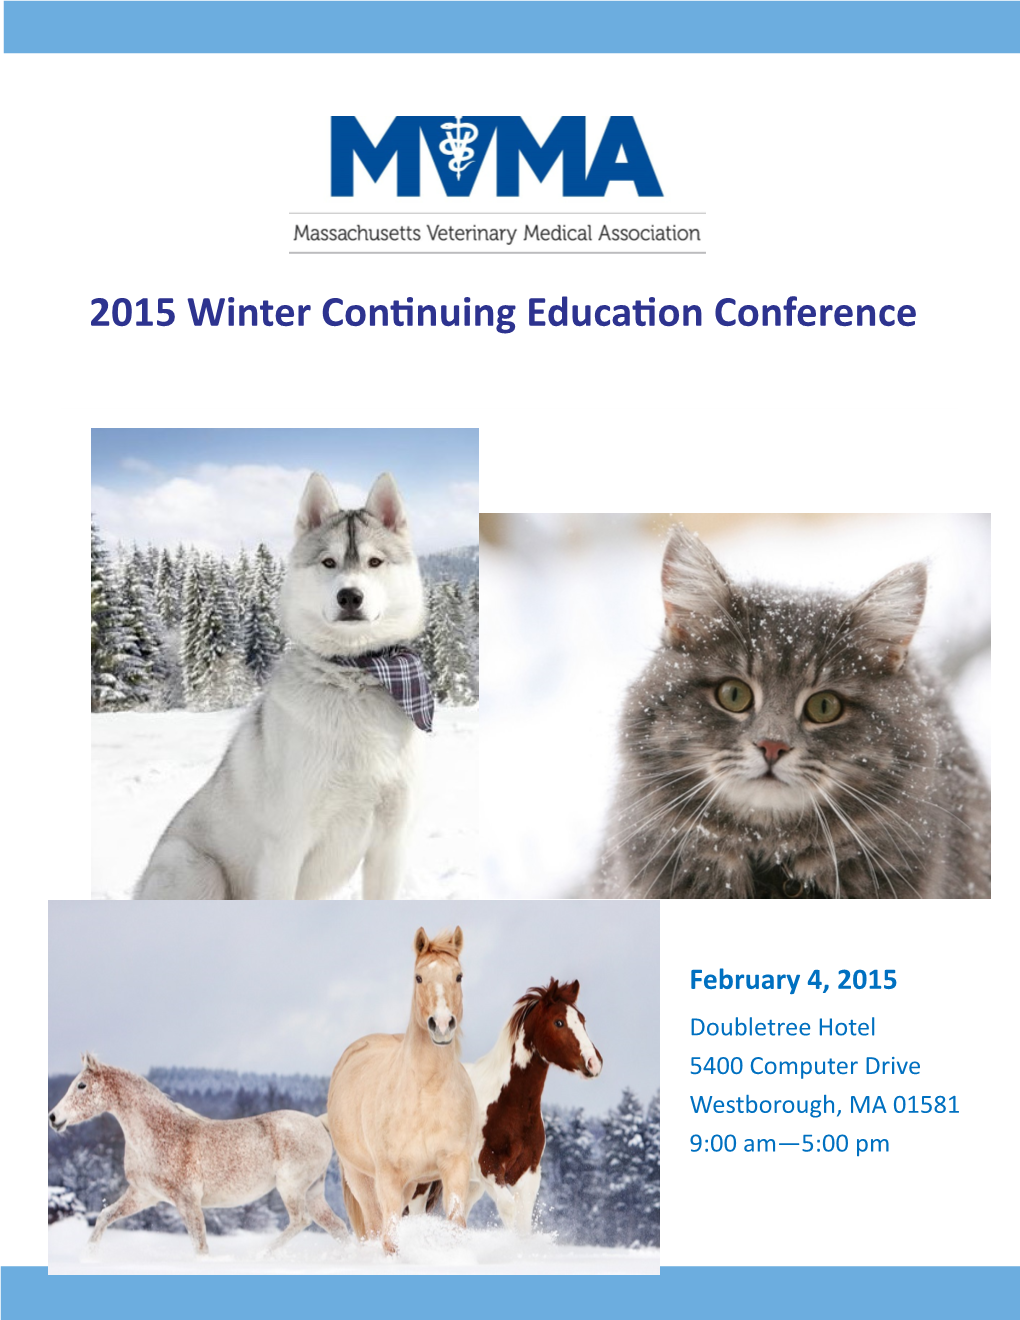 2015 Winter CE Conference Program